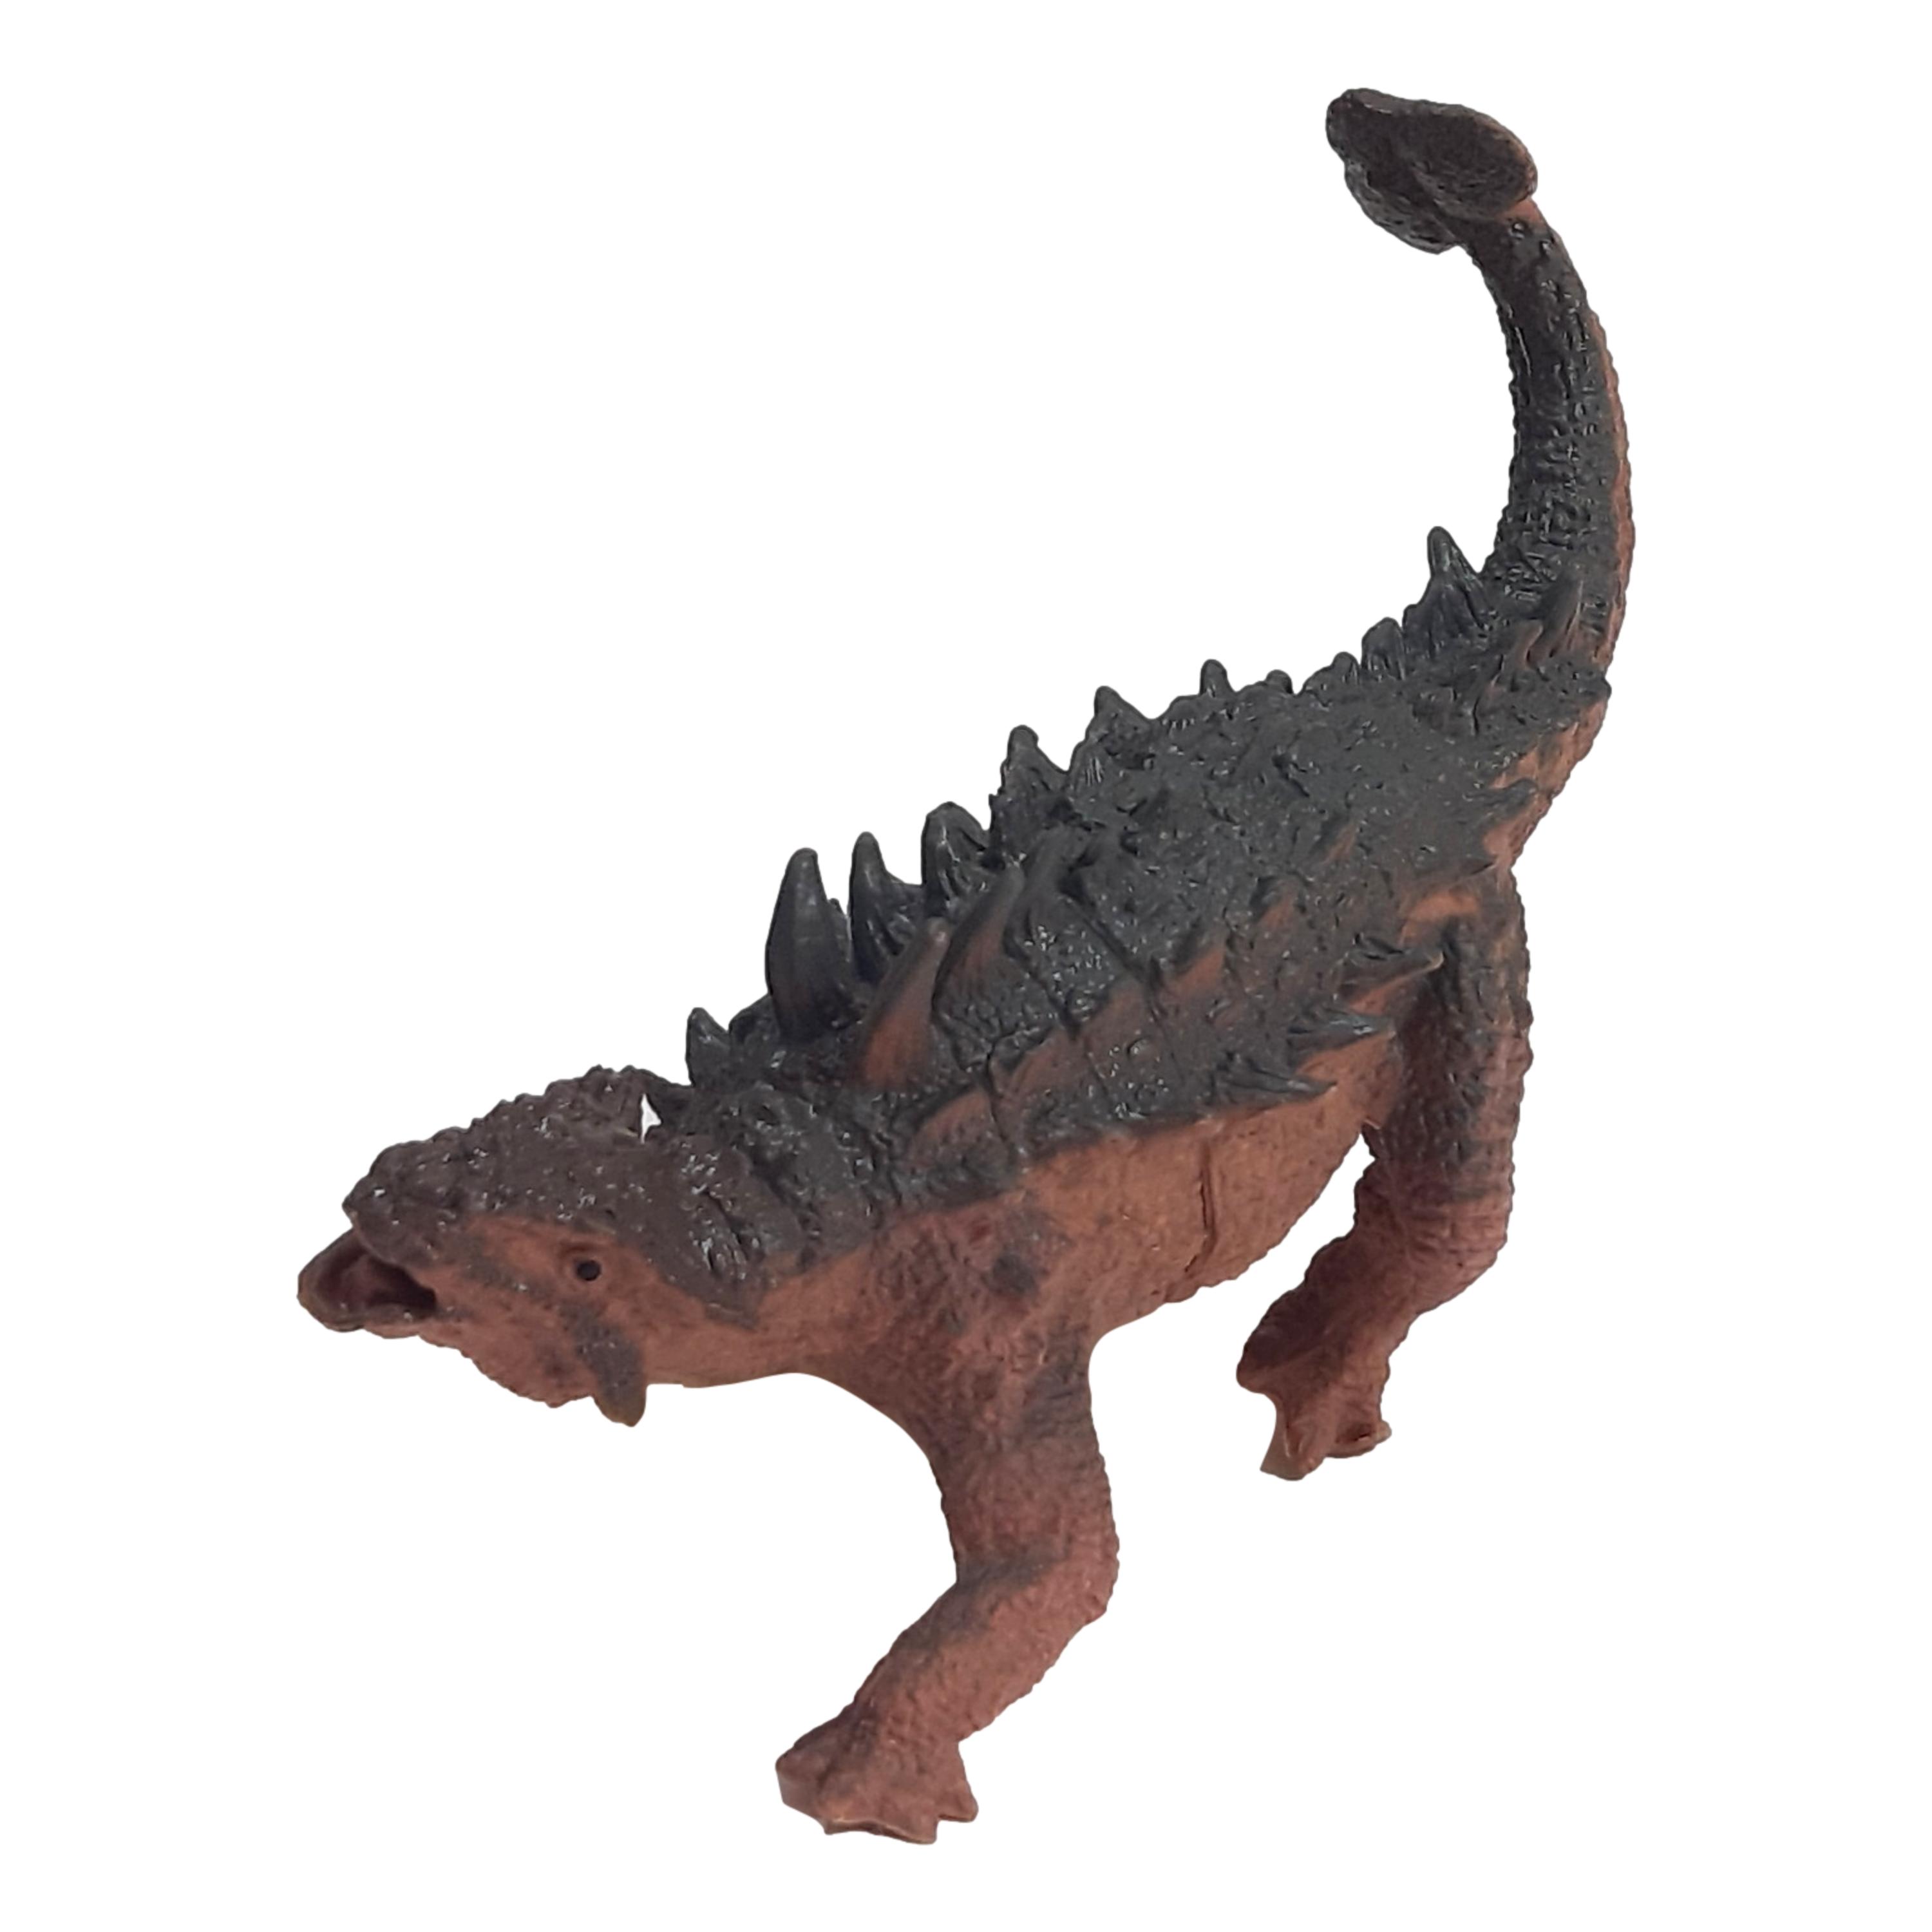 Figurina Dinozaur de Colectie, Dimensiune 10 cm, Model Realist, Maro deschis/Maro